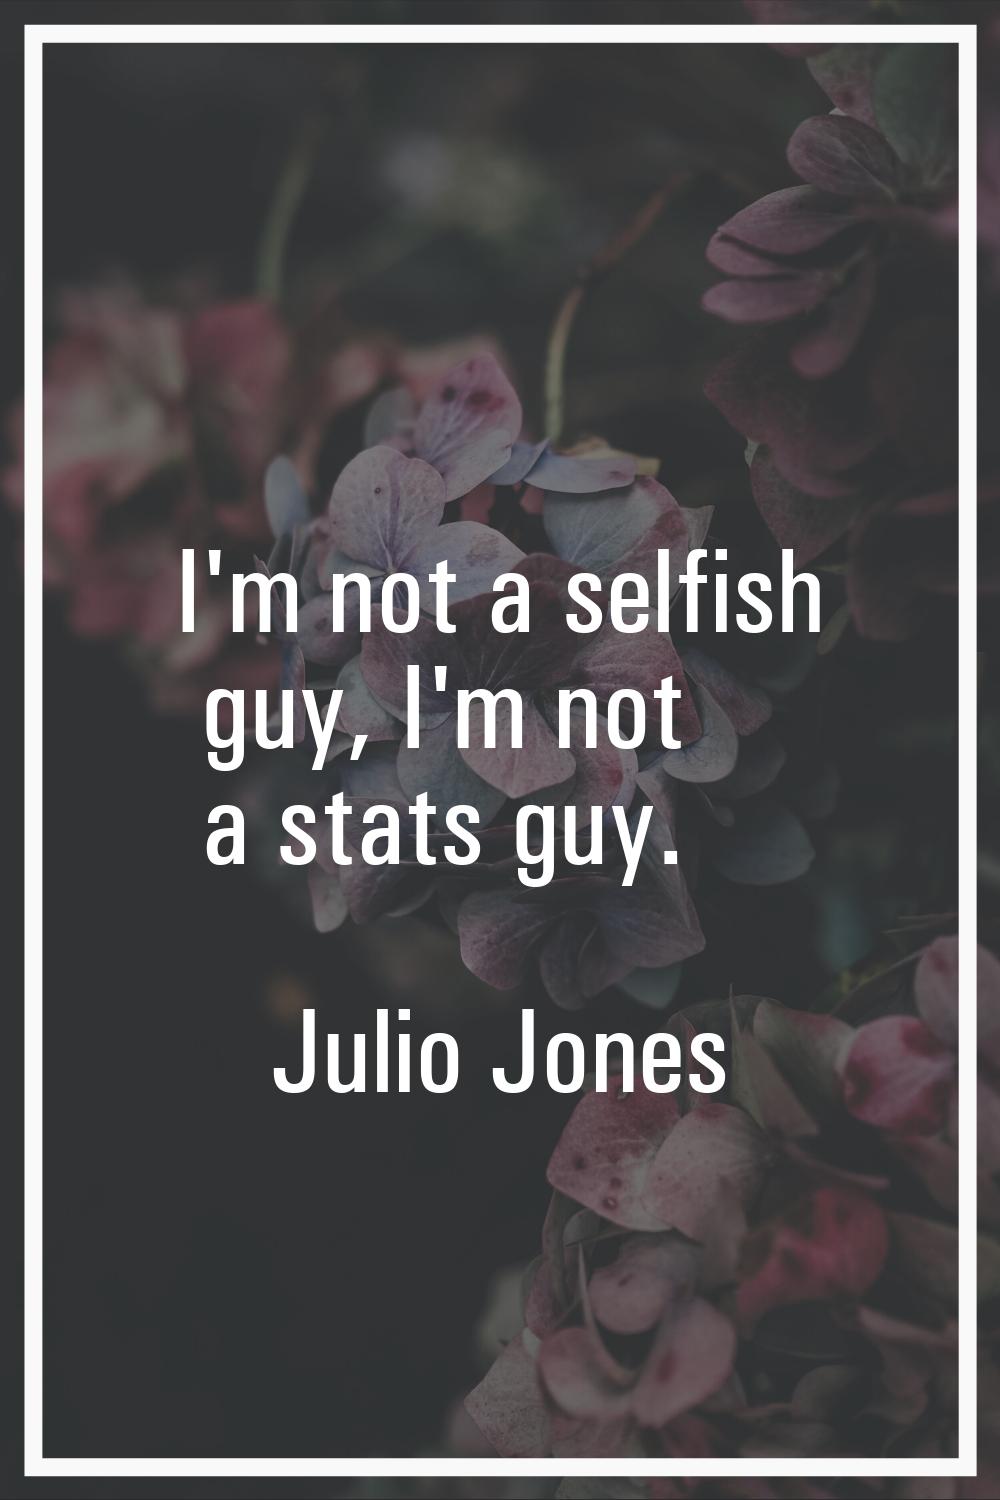 I'm not a selfish guy, I'm not a stats guy.